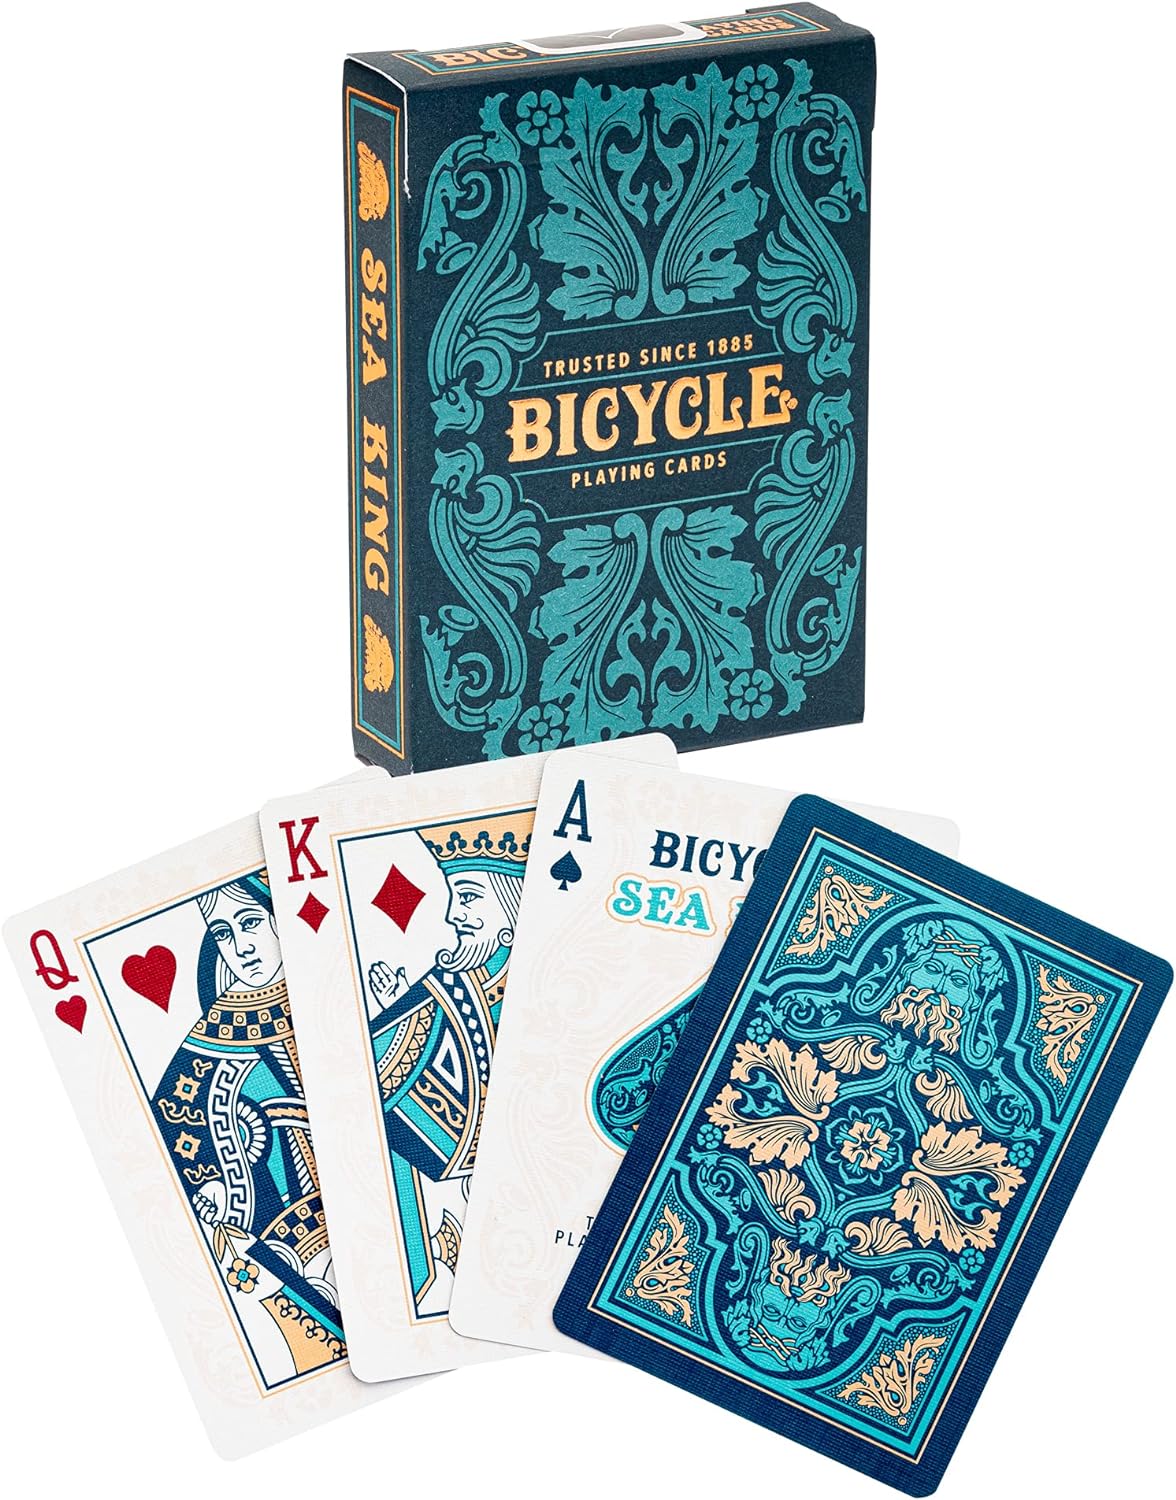 $1.79: Bicycle Sea King Playing Cards [🧜]